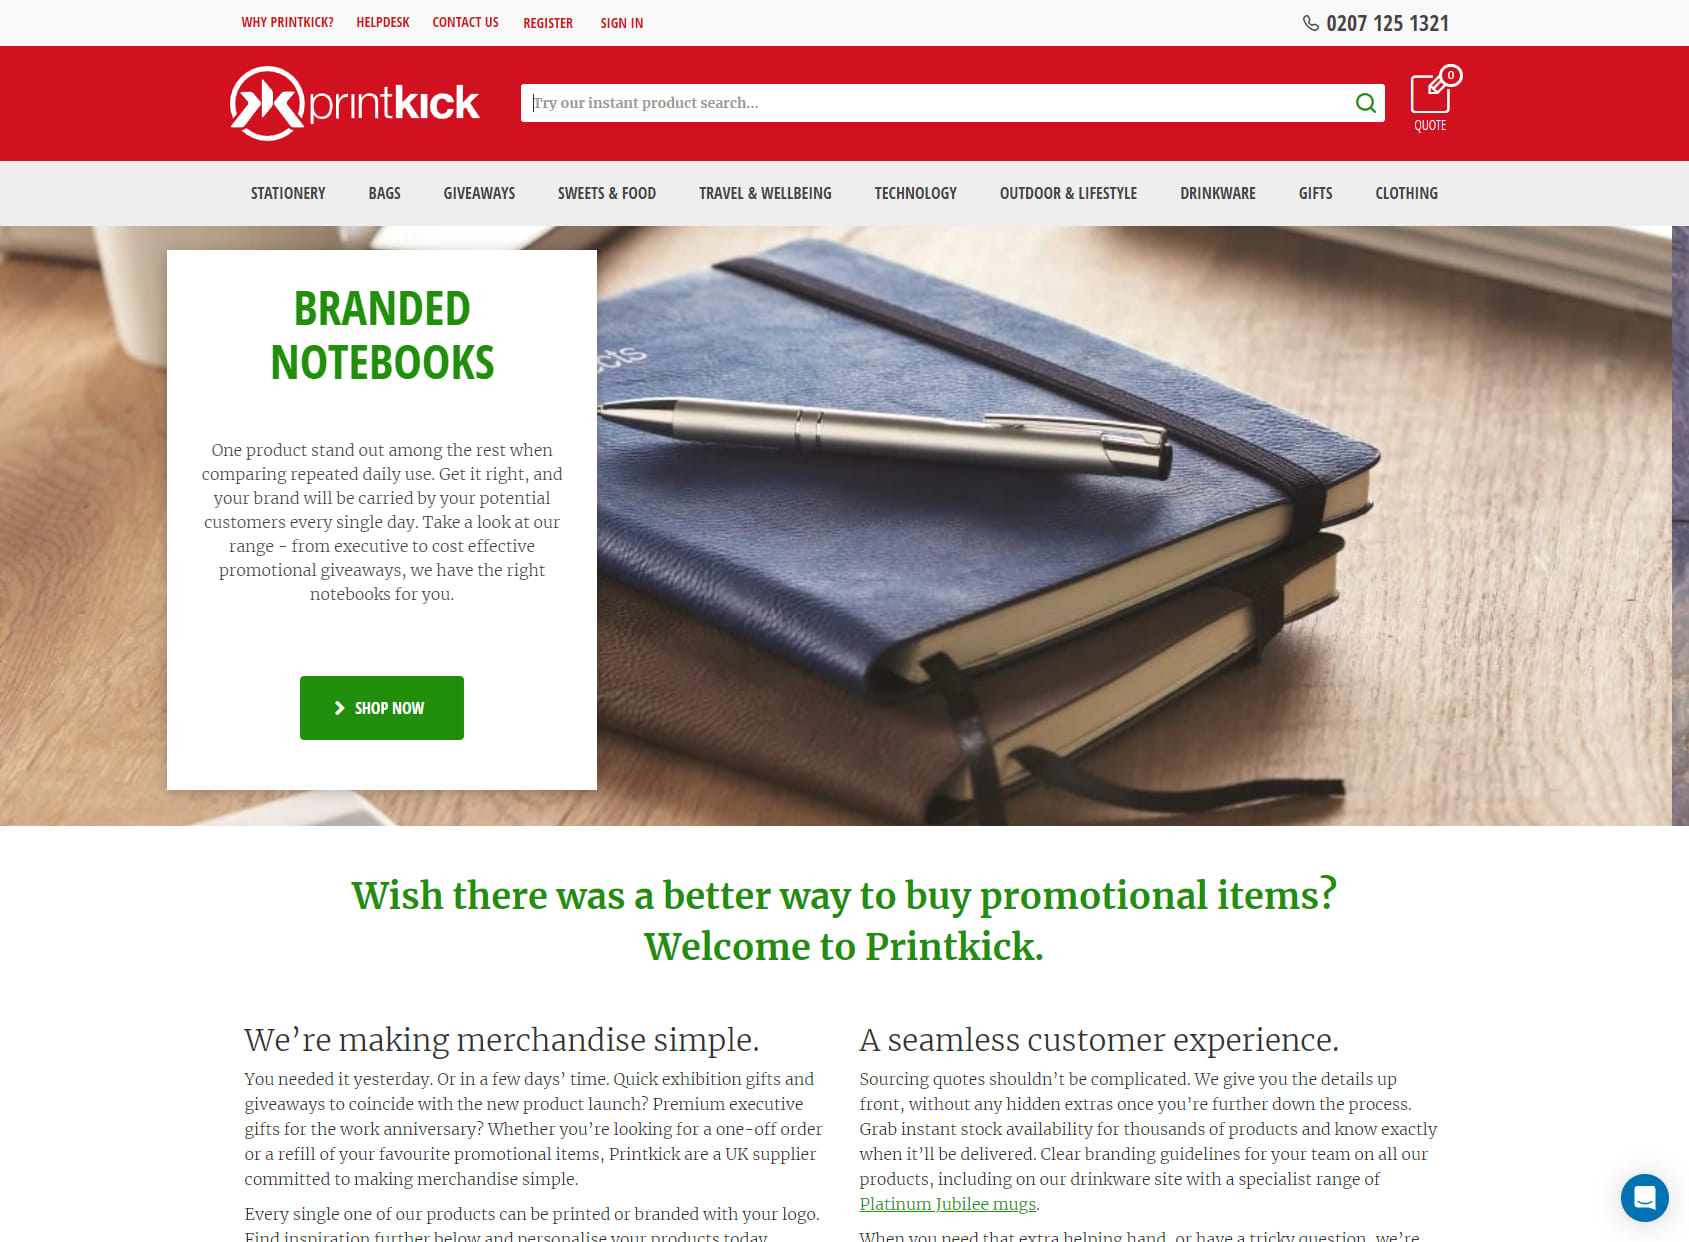 Printkick Promotional Merchandise